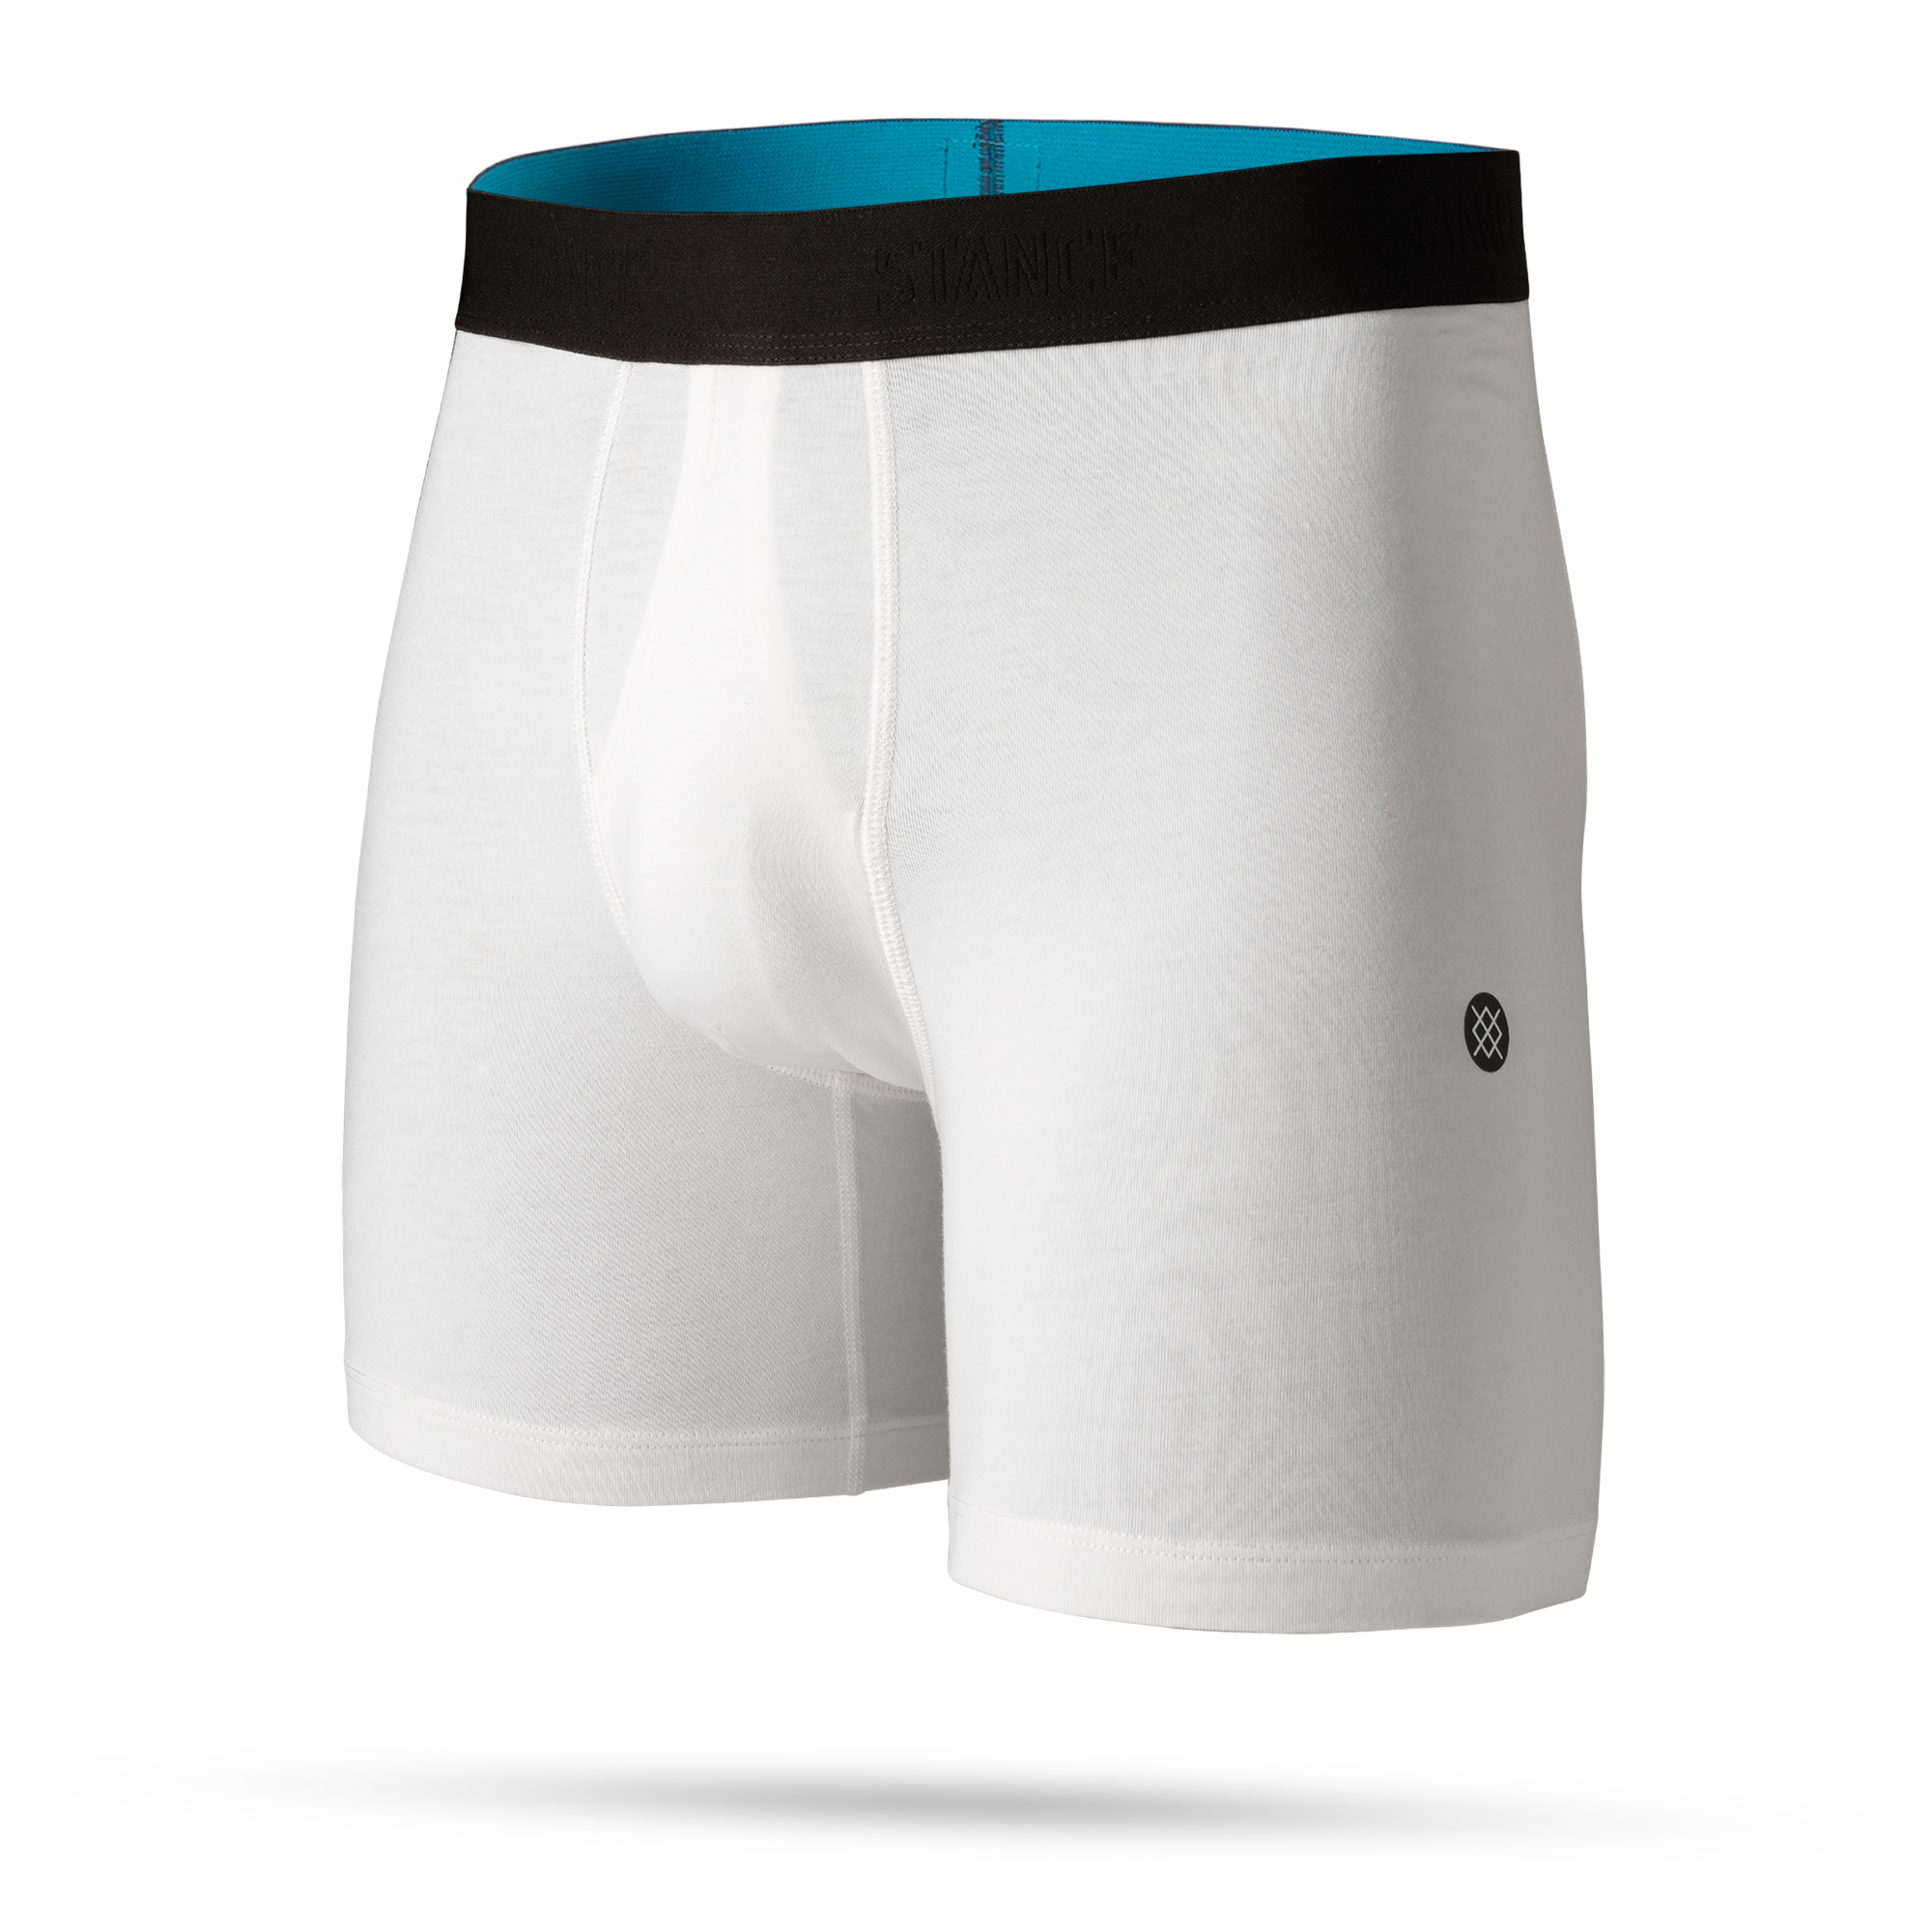 Regular Fit Underwear with Narrow Hip Bamboo PureLine - inSPORTline